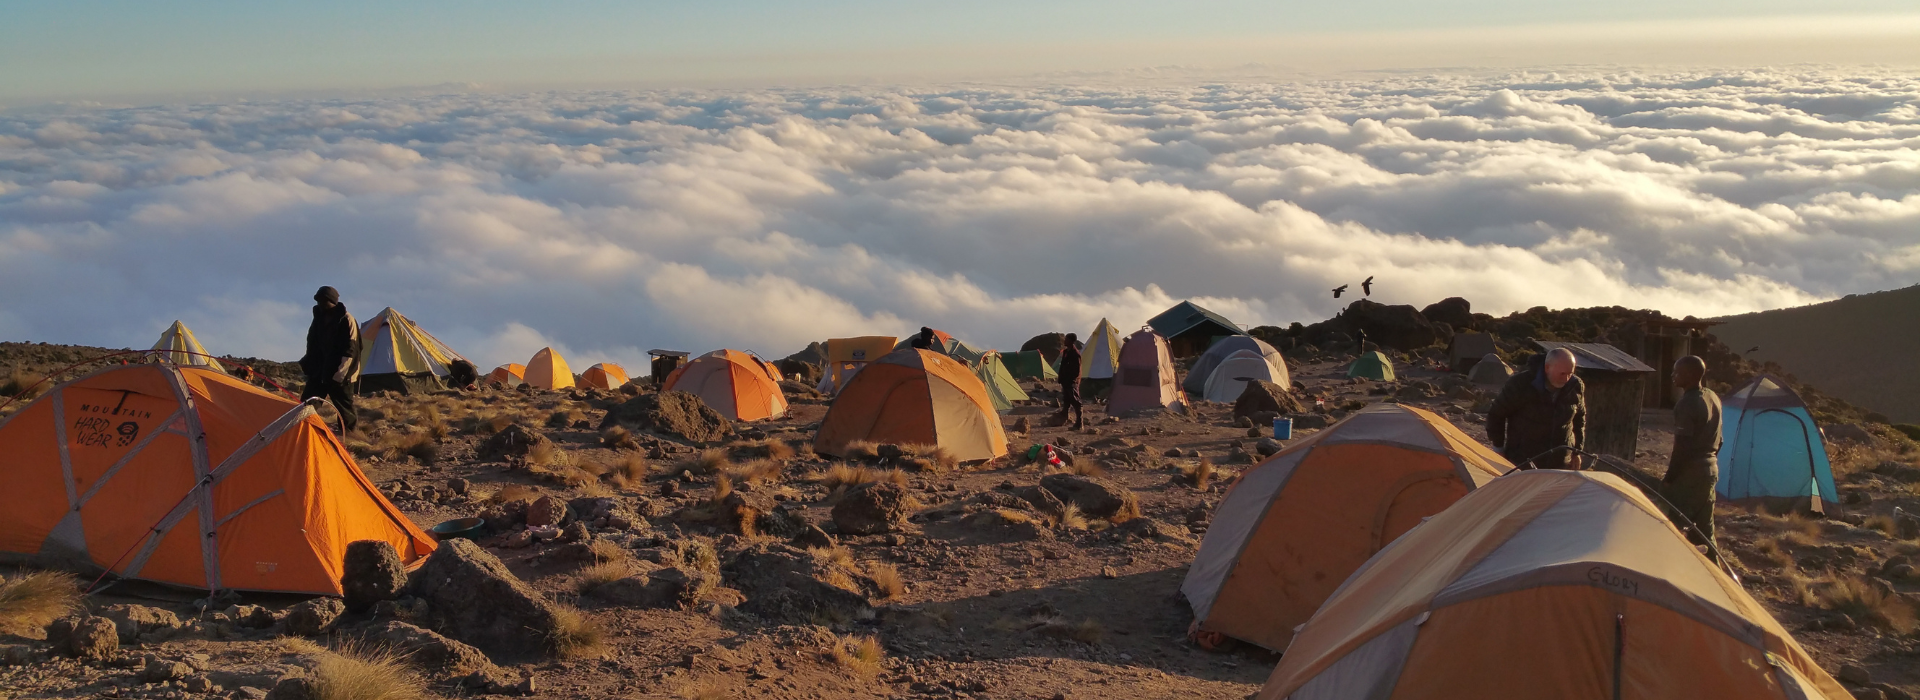 Kilimanjaro with Dermot Whelan and Earth's Edge